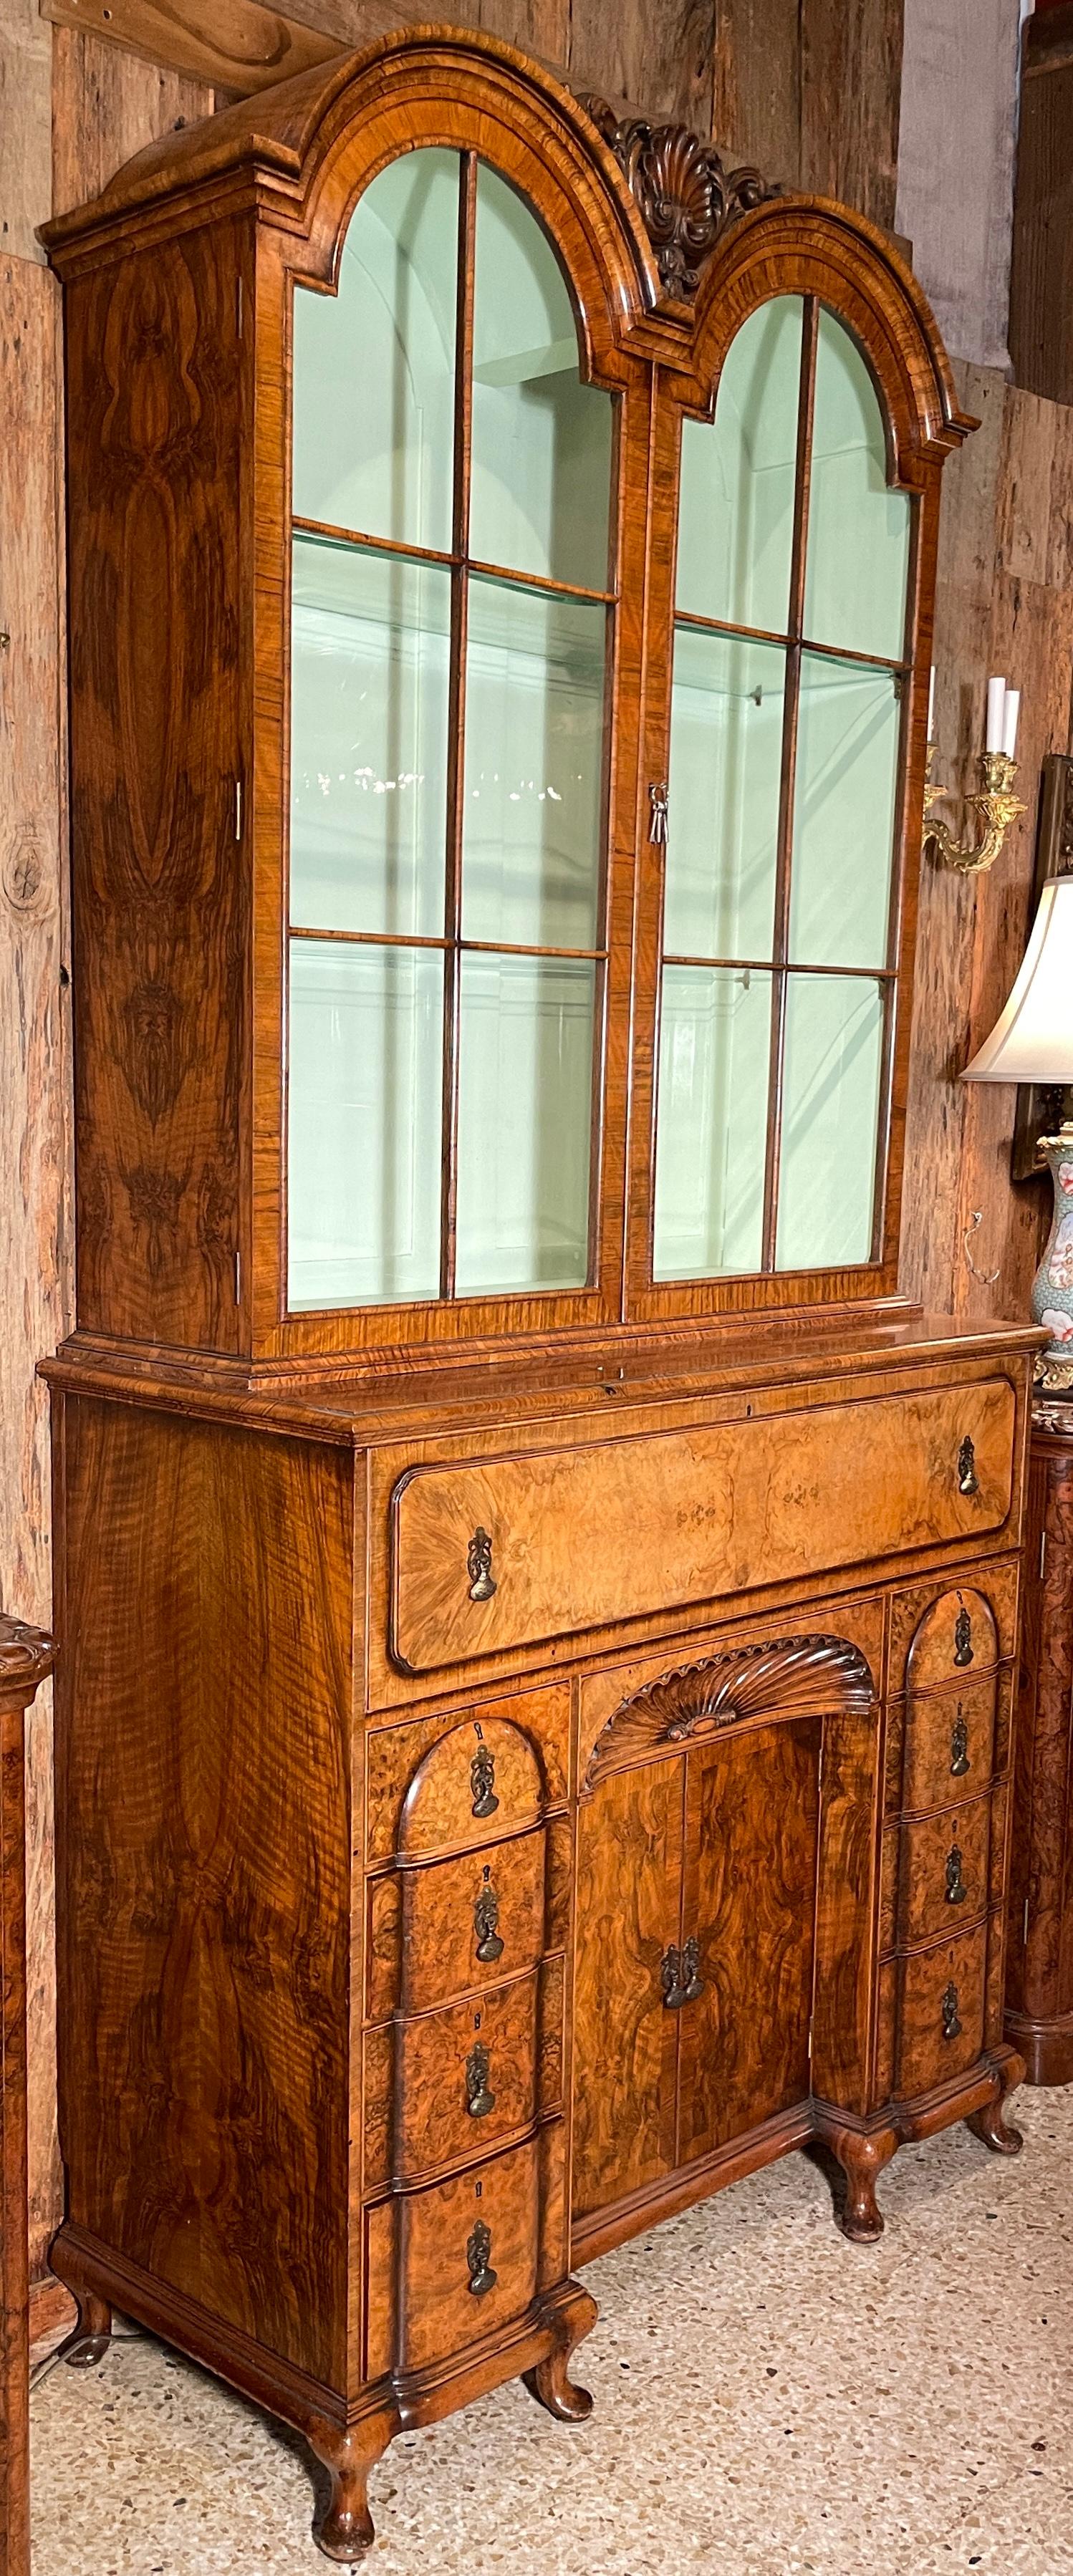 Antique English Walnut Glass-Front Secretary Bookcase, Circa 1880-1890 In Good Condition For Sale In New Orleans, LA